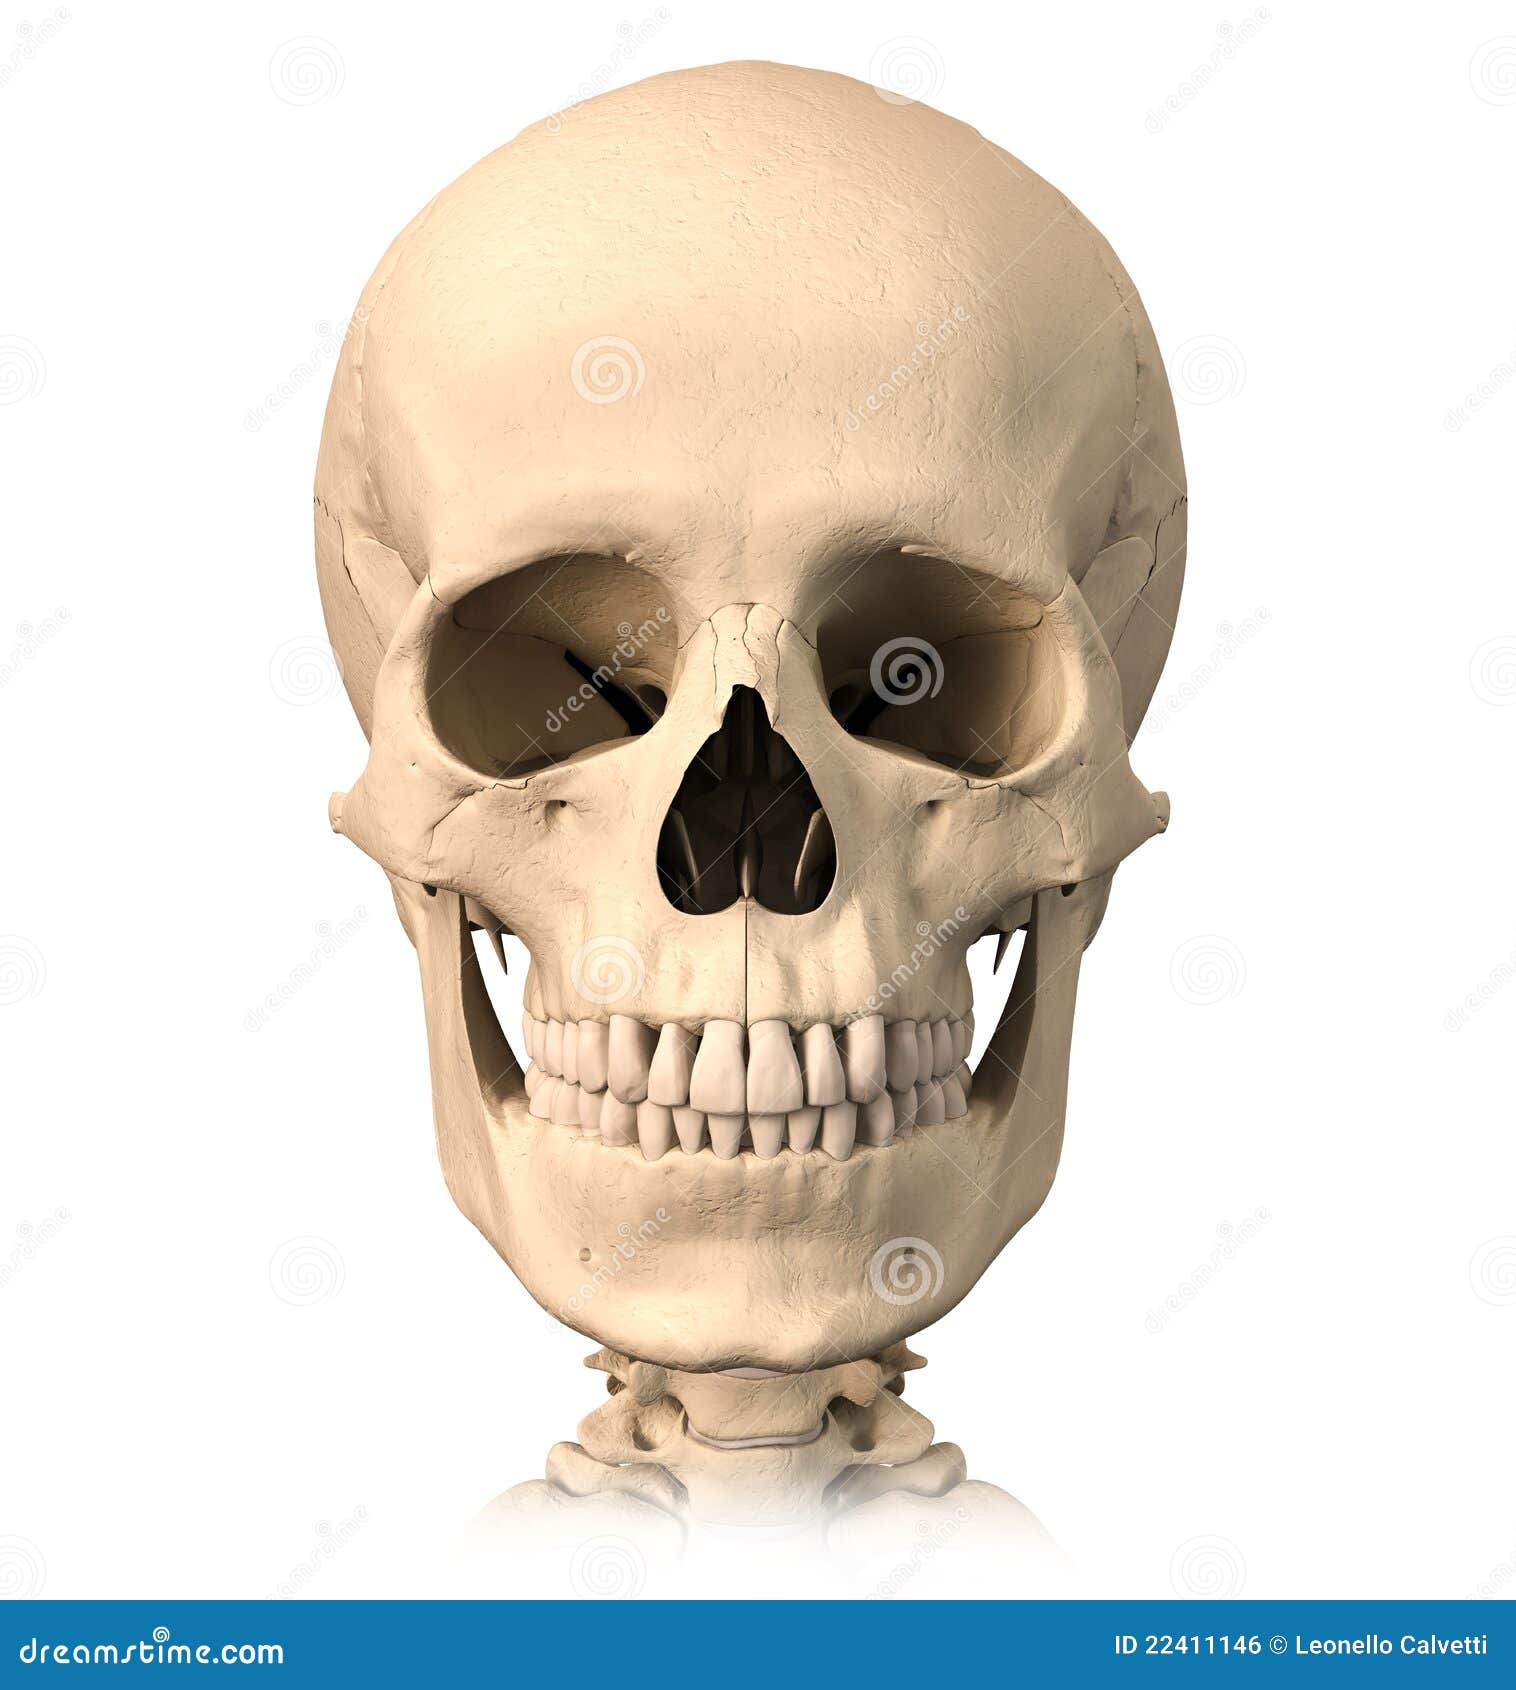 skull front profile